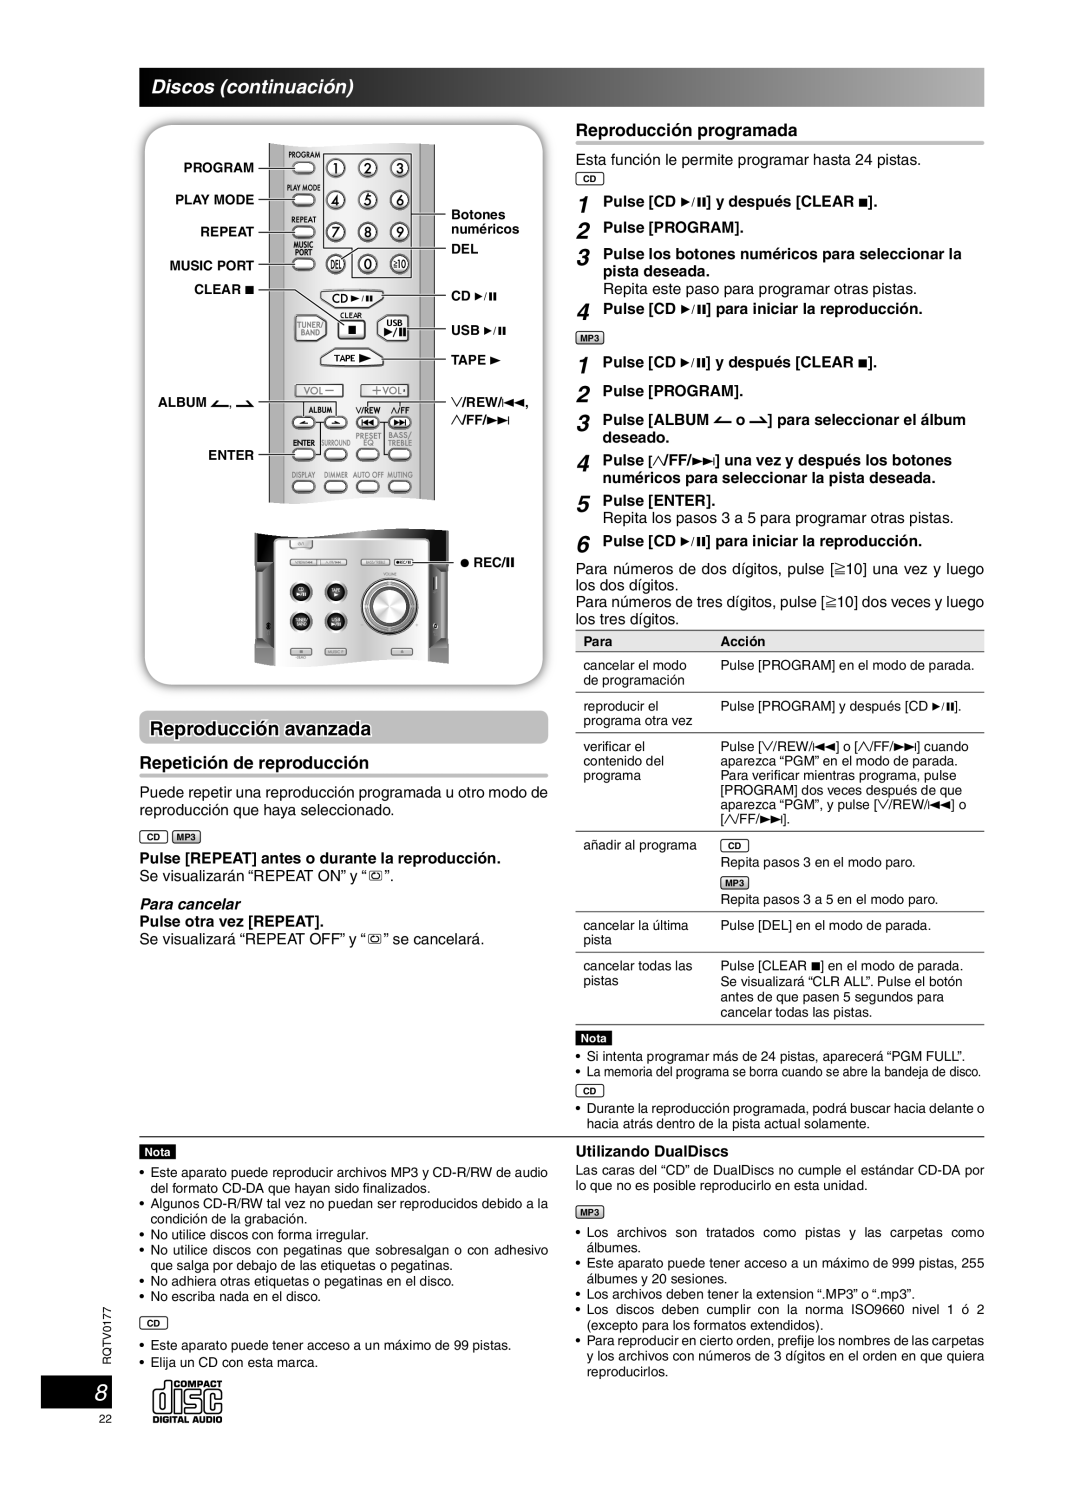 Panasonic SC-PM45 manual Discos continuación, Reproducción avanzada, Repetición de reproducción, Reproducción programada 